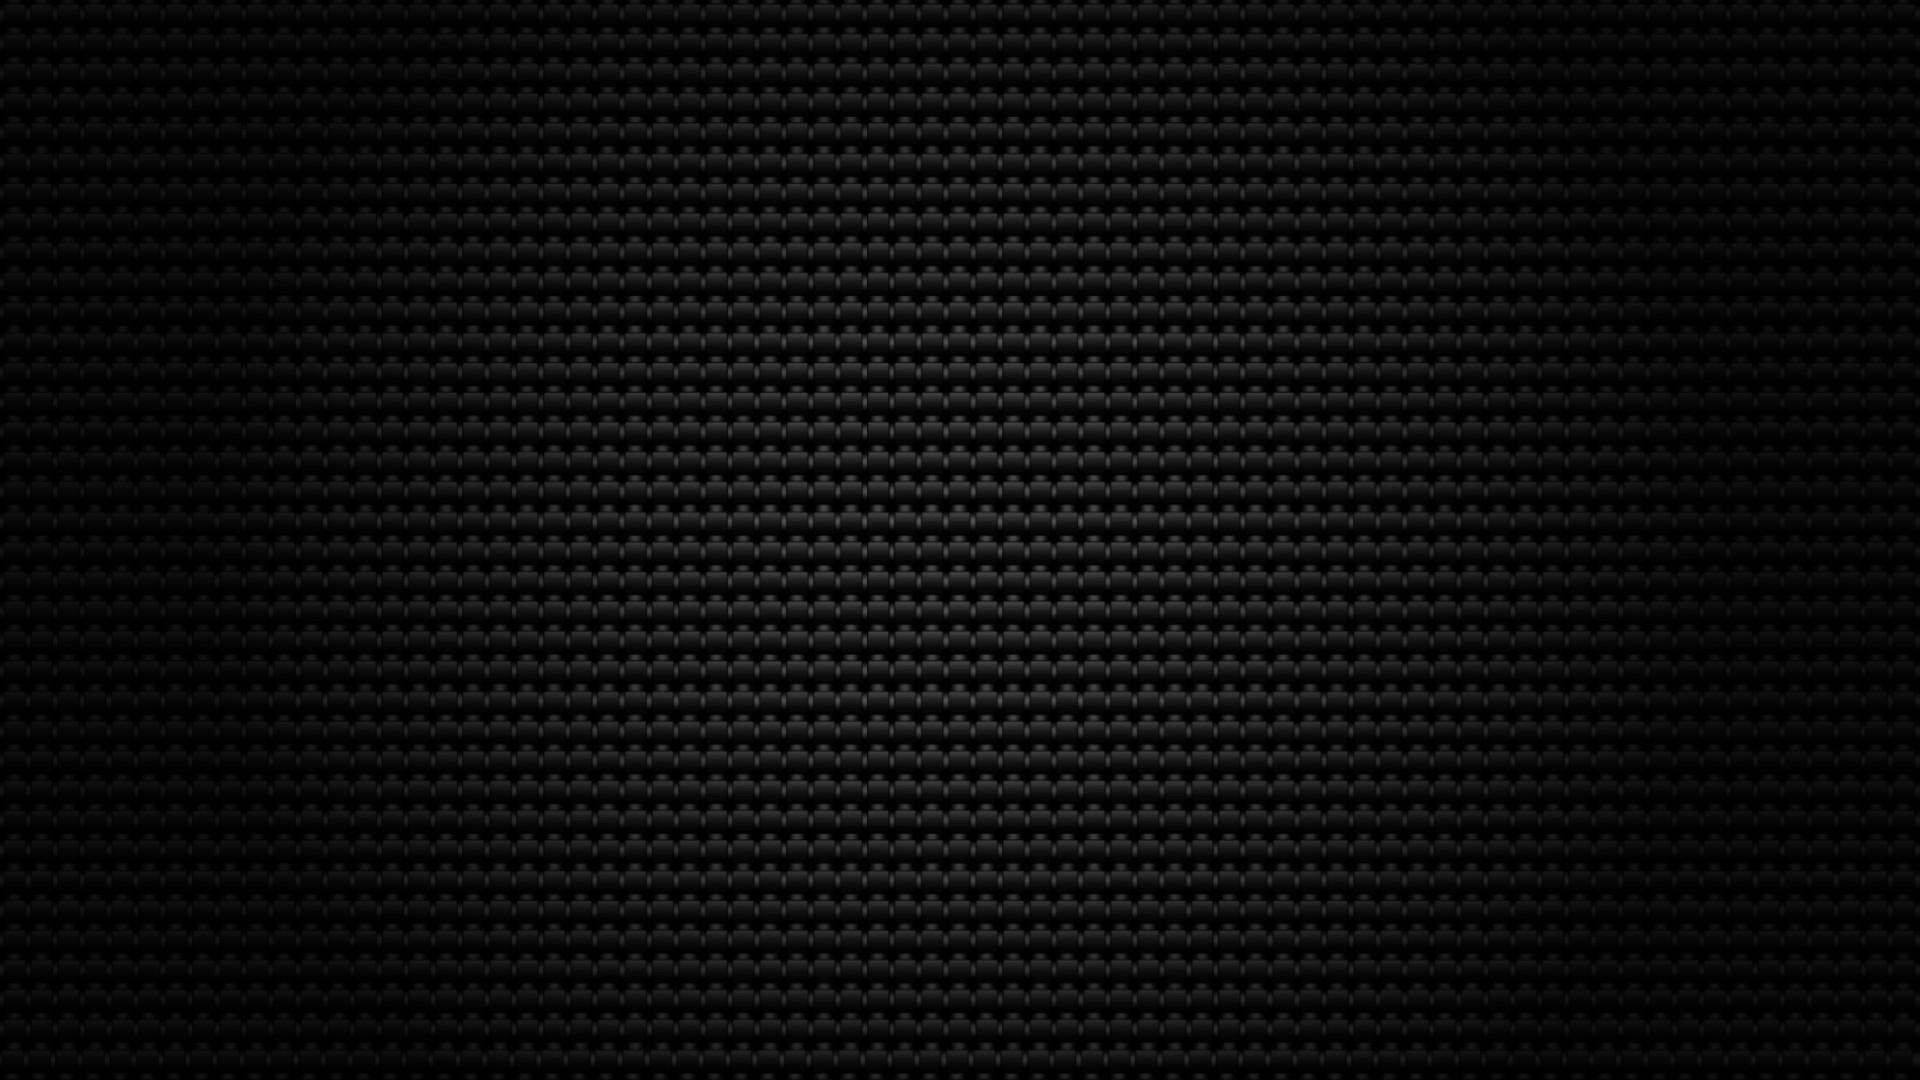 Abstract Background Black Carbon Fiber Fibers Wallpaper